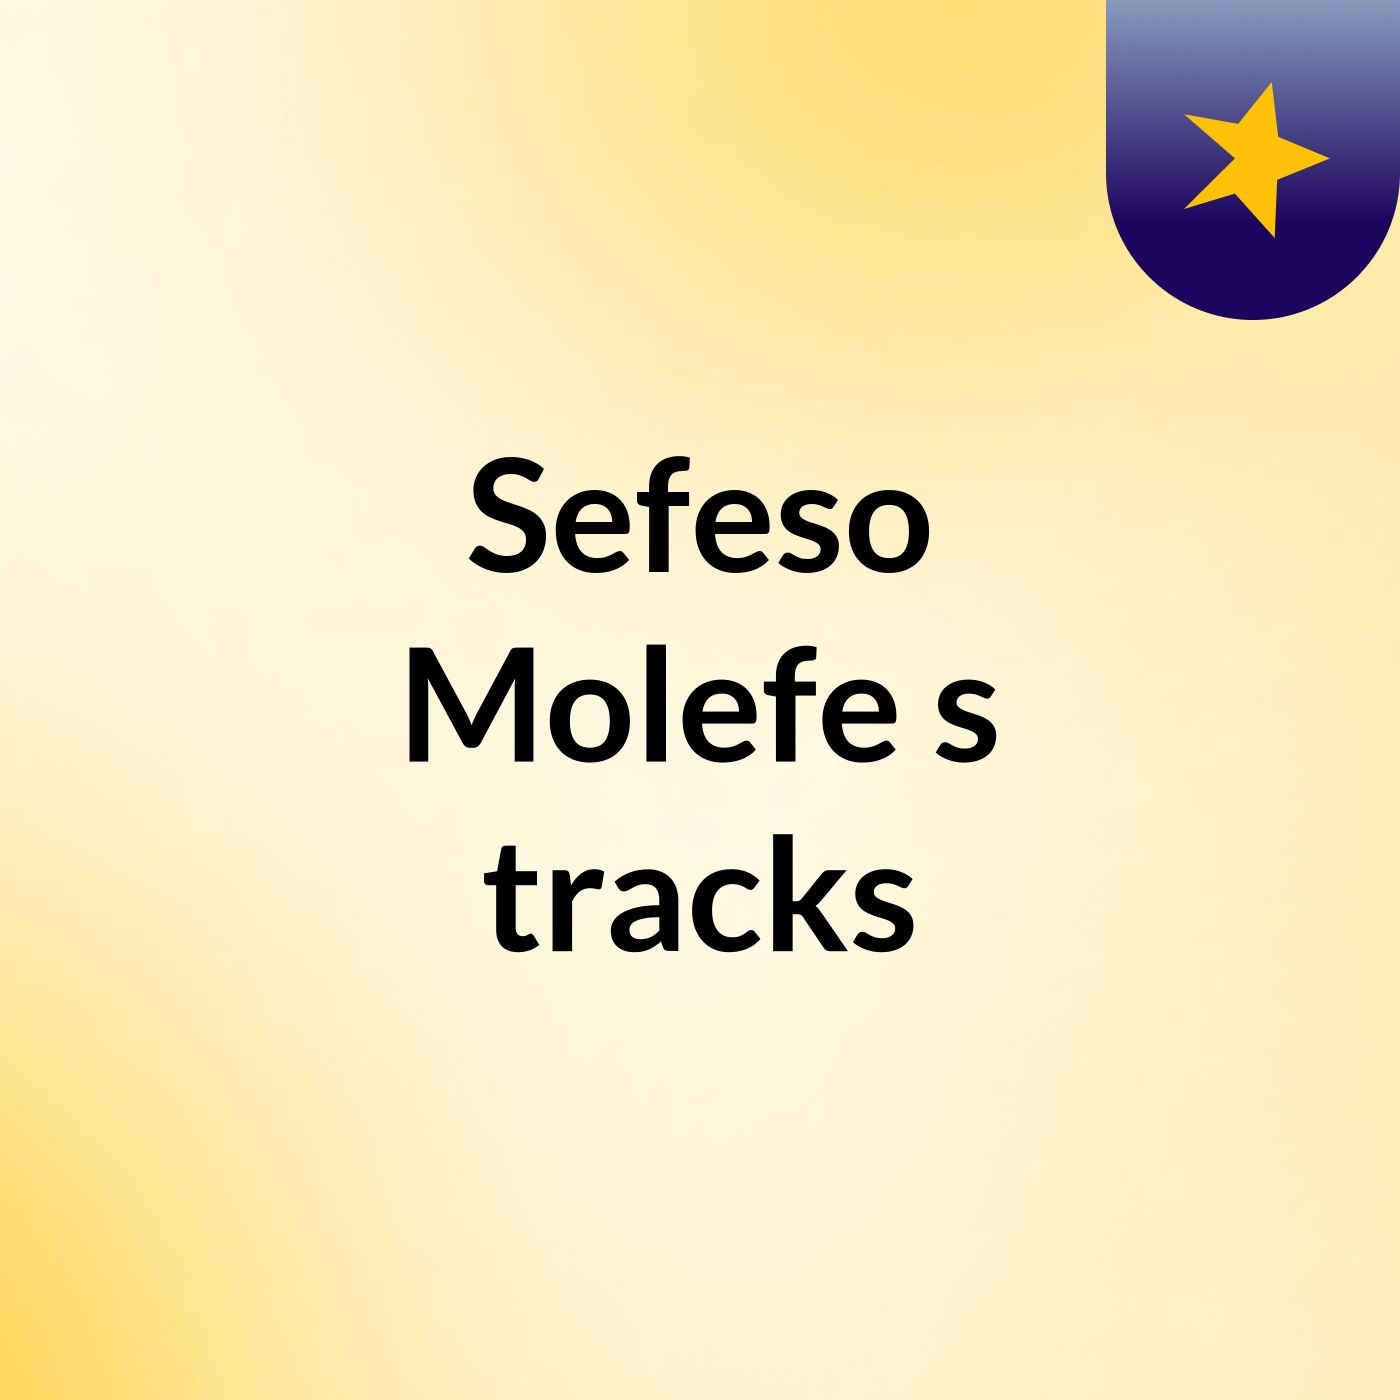 Episode 17 - Sefeso Molefe's tracks